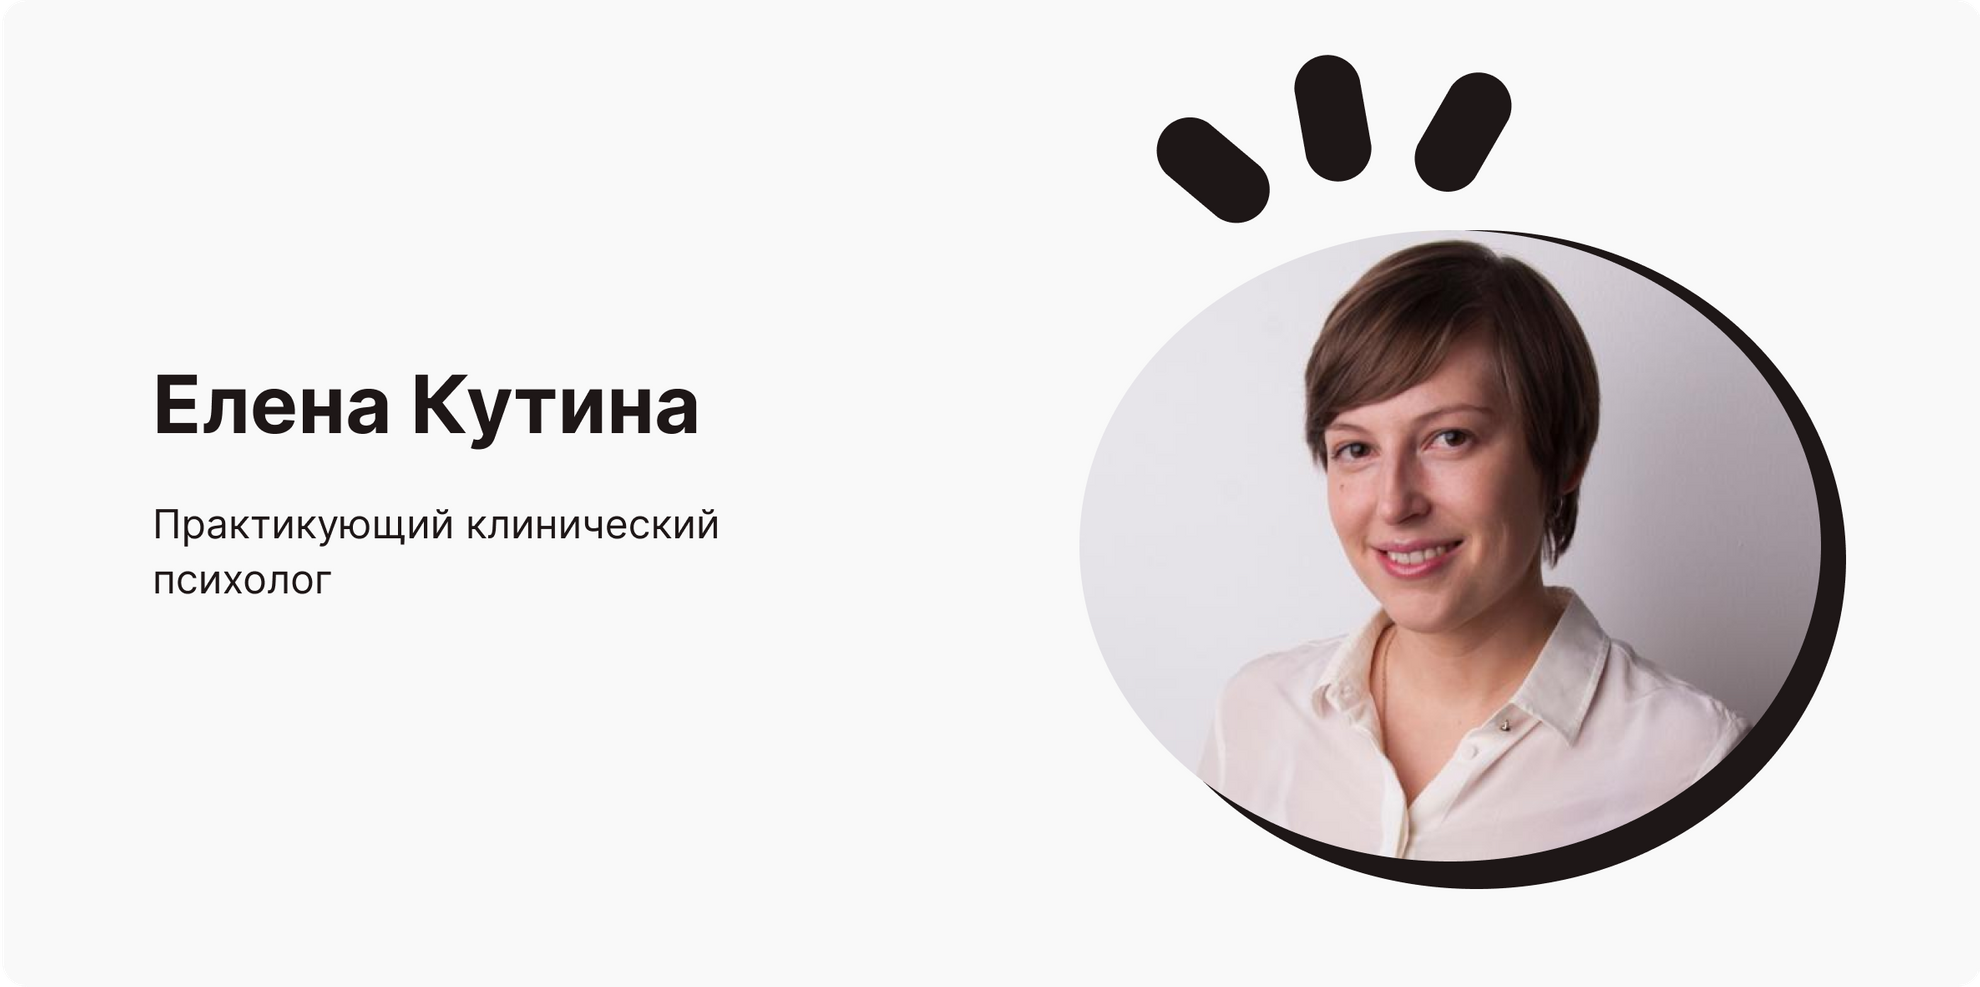 Елена Кутина, практикующий клинический психолог